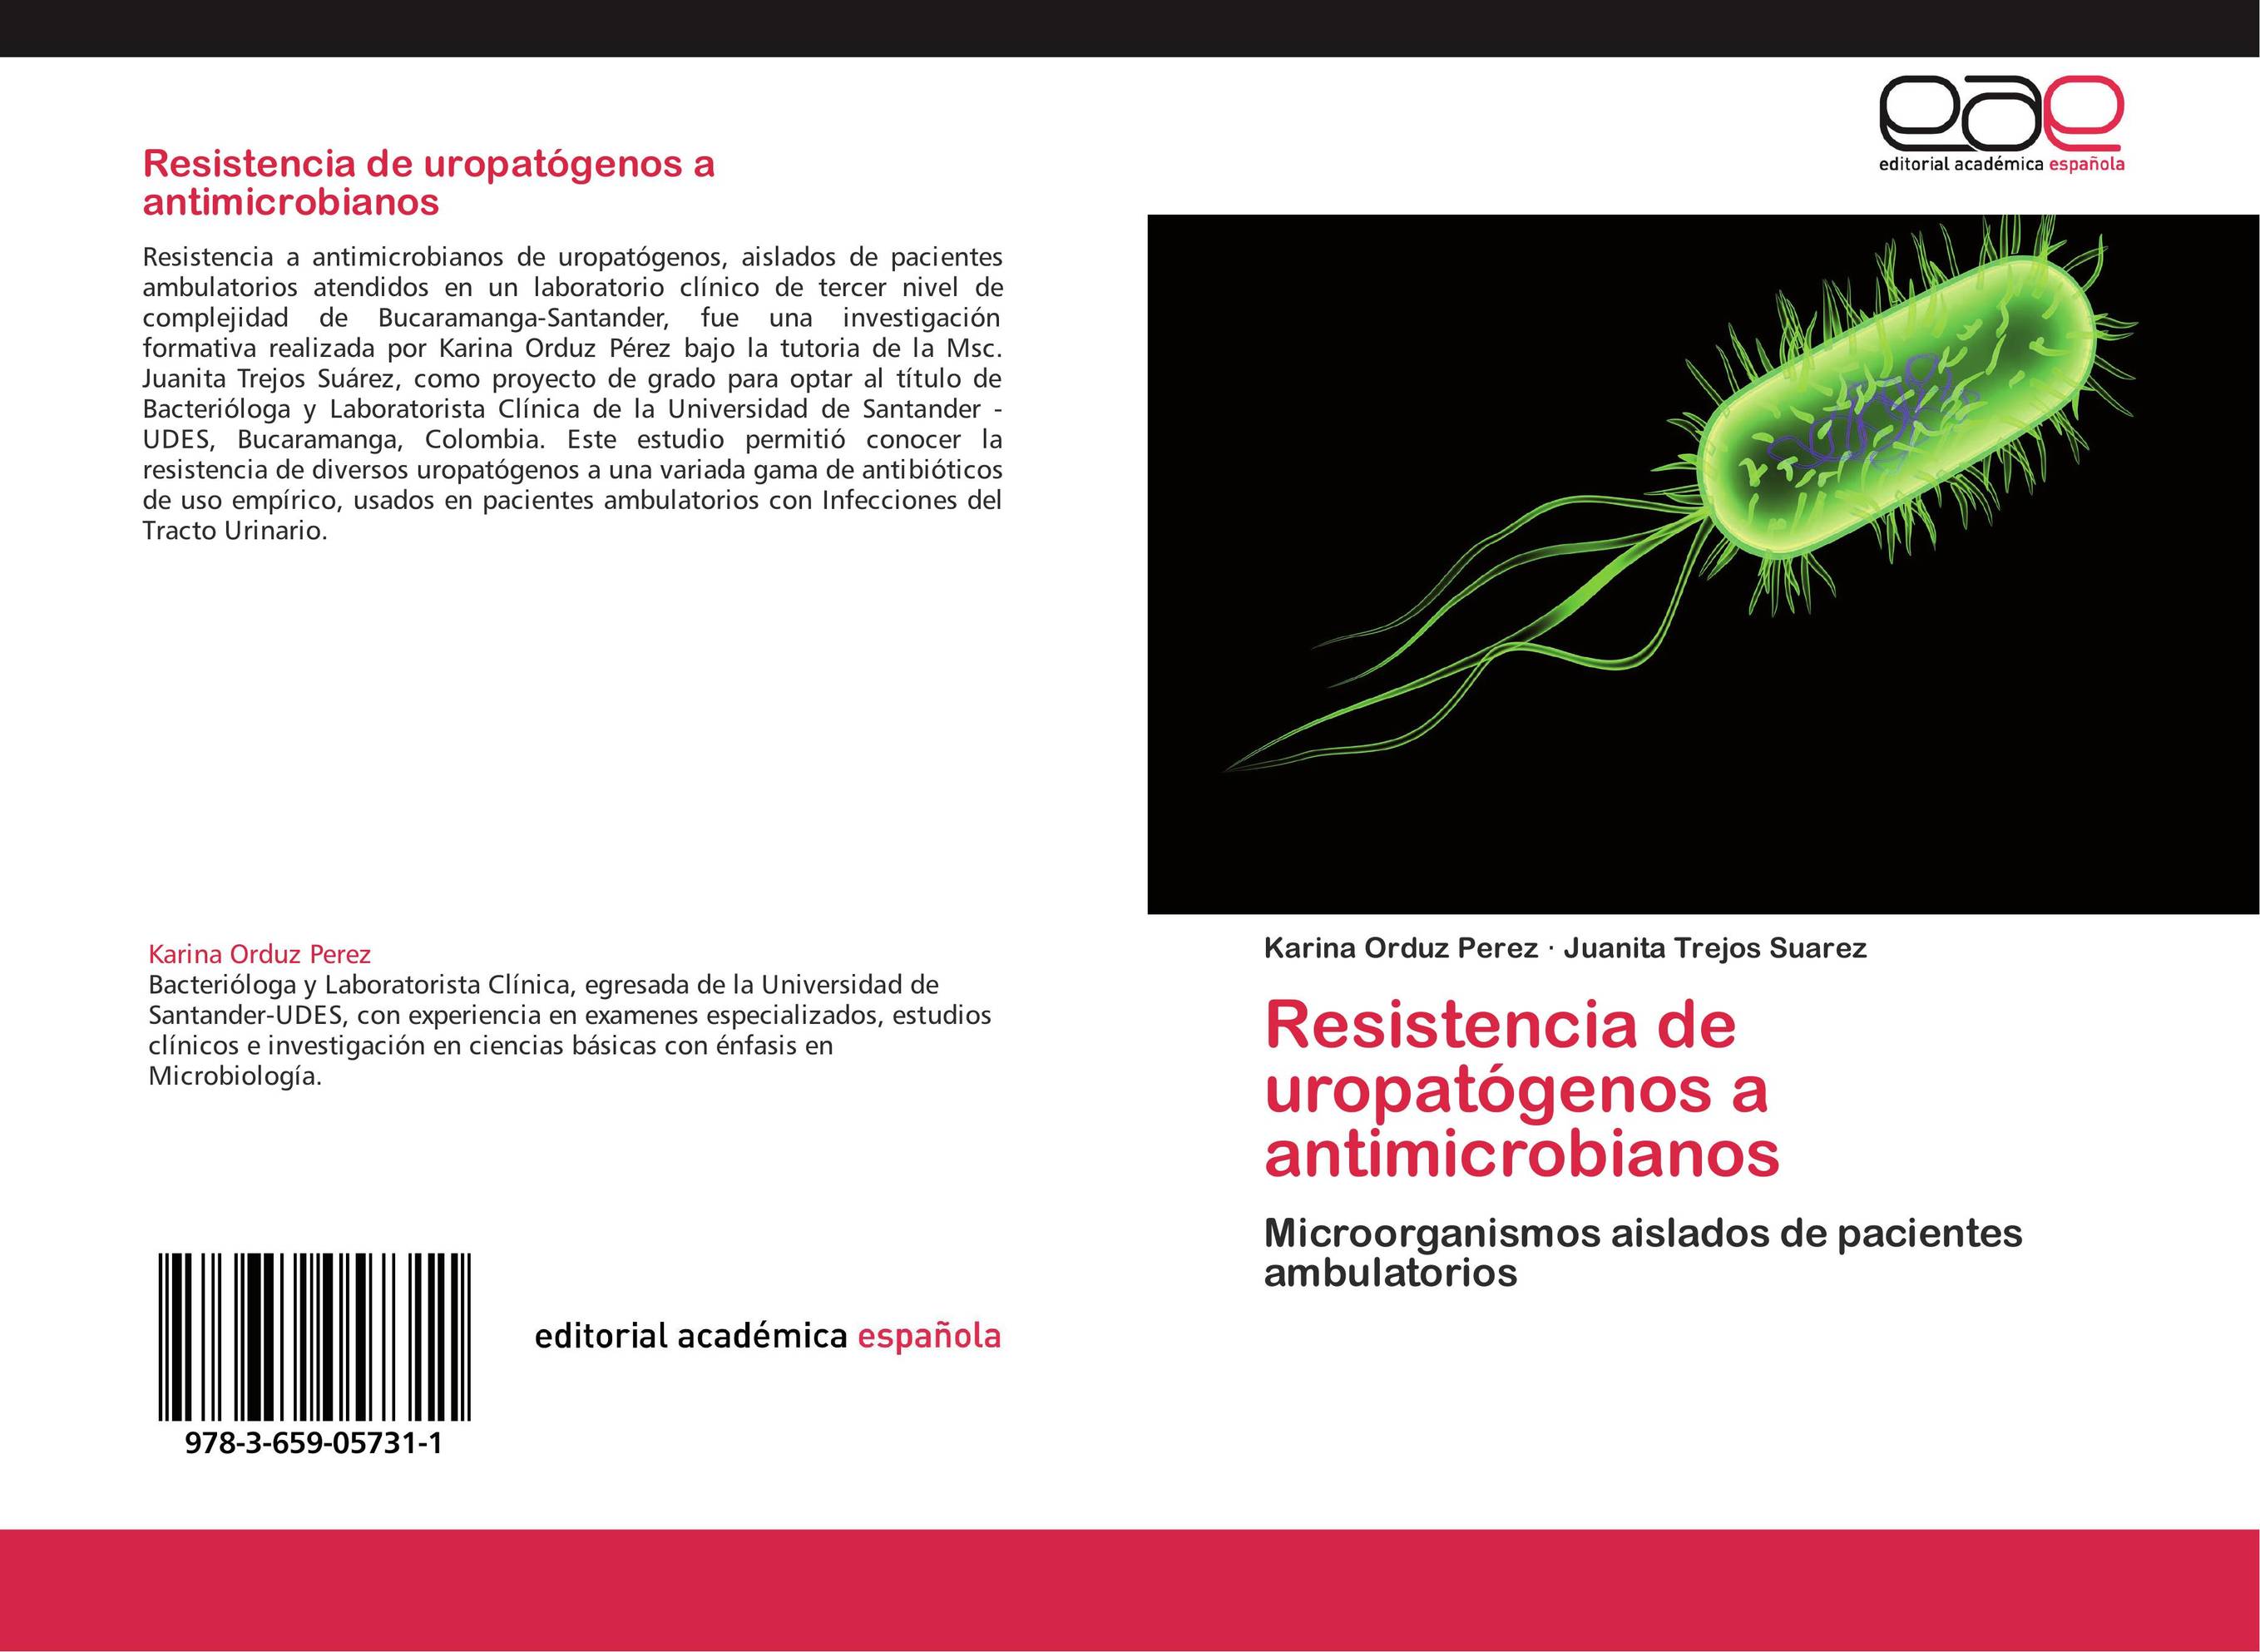 Resistencia de uropatógenos a antimicrobianos